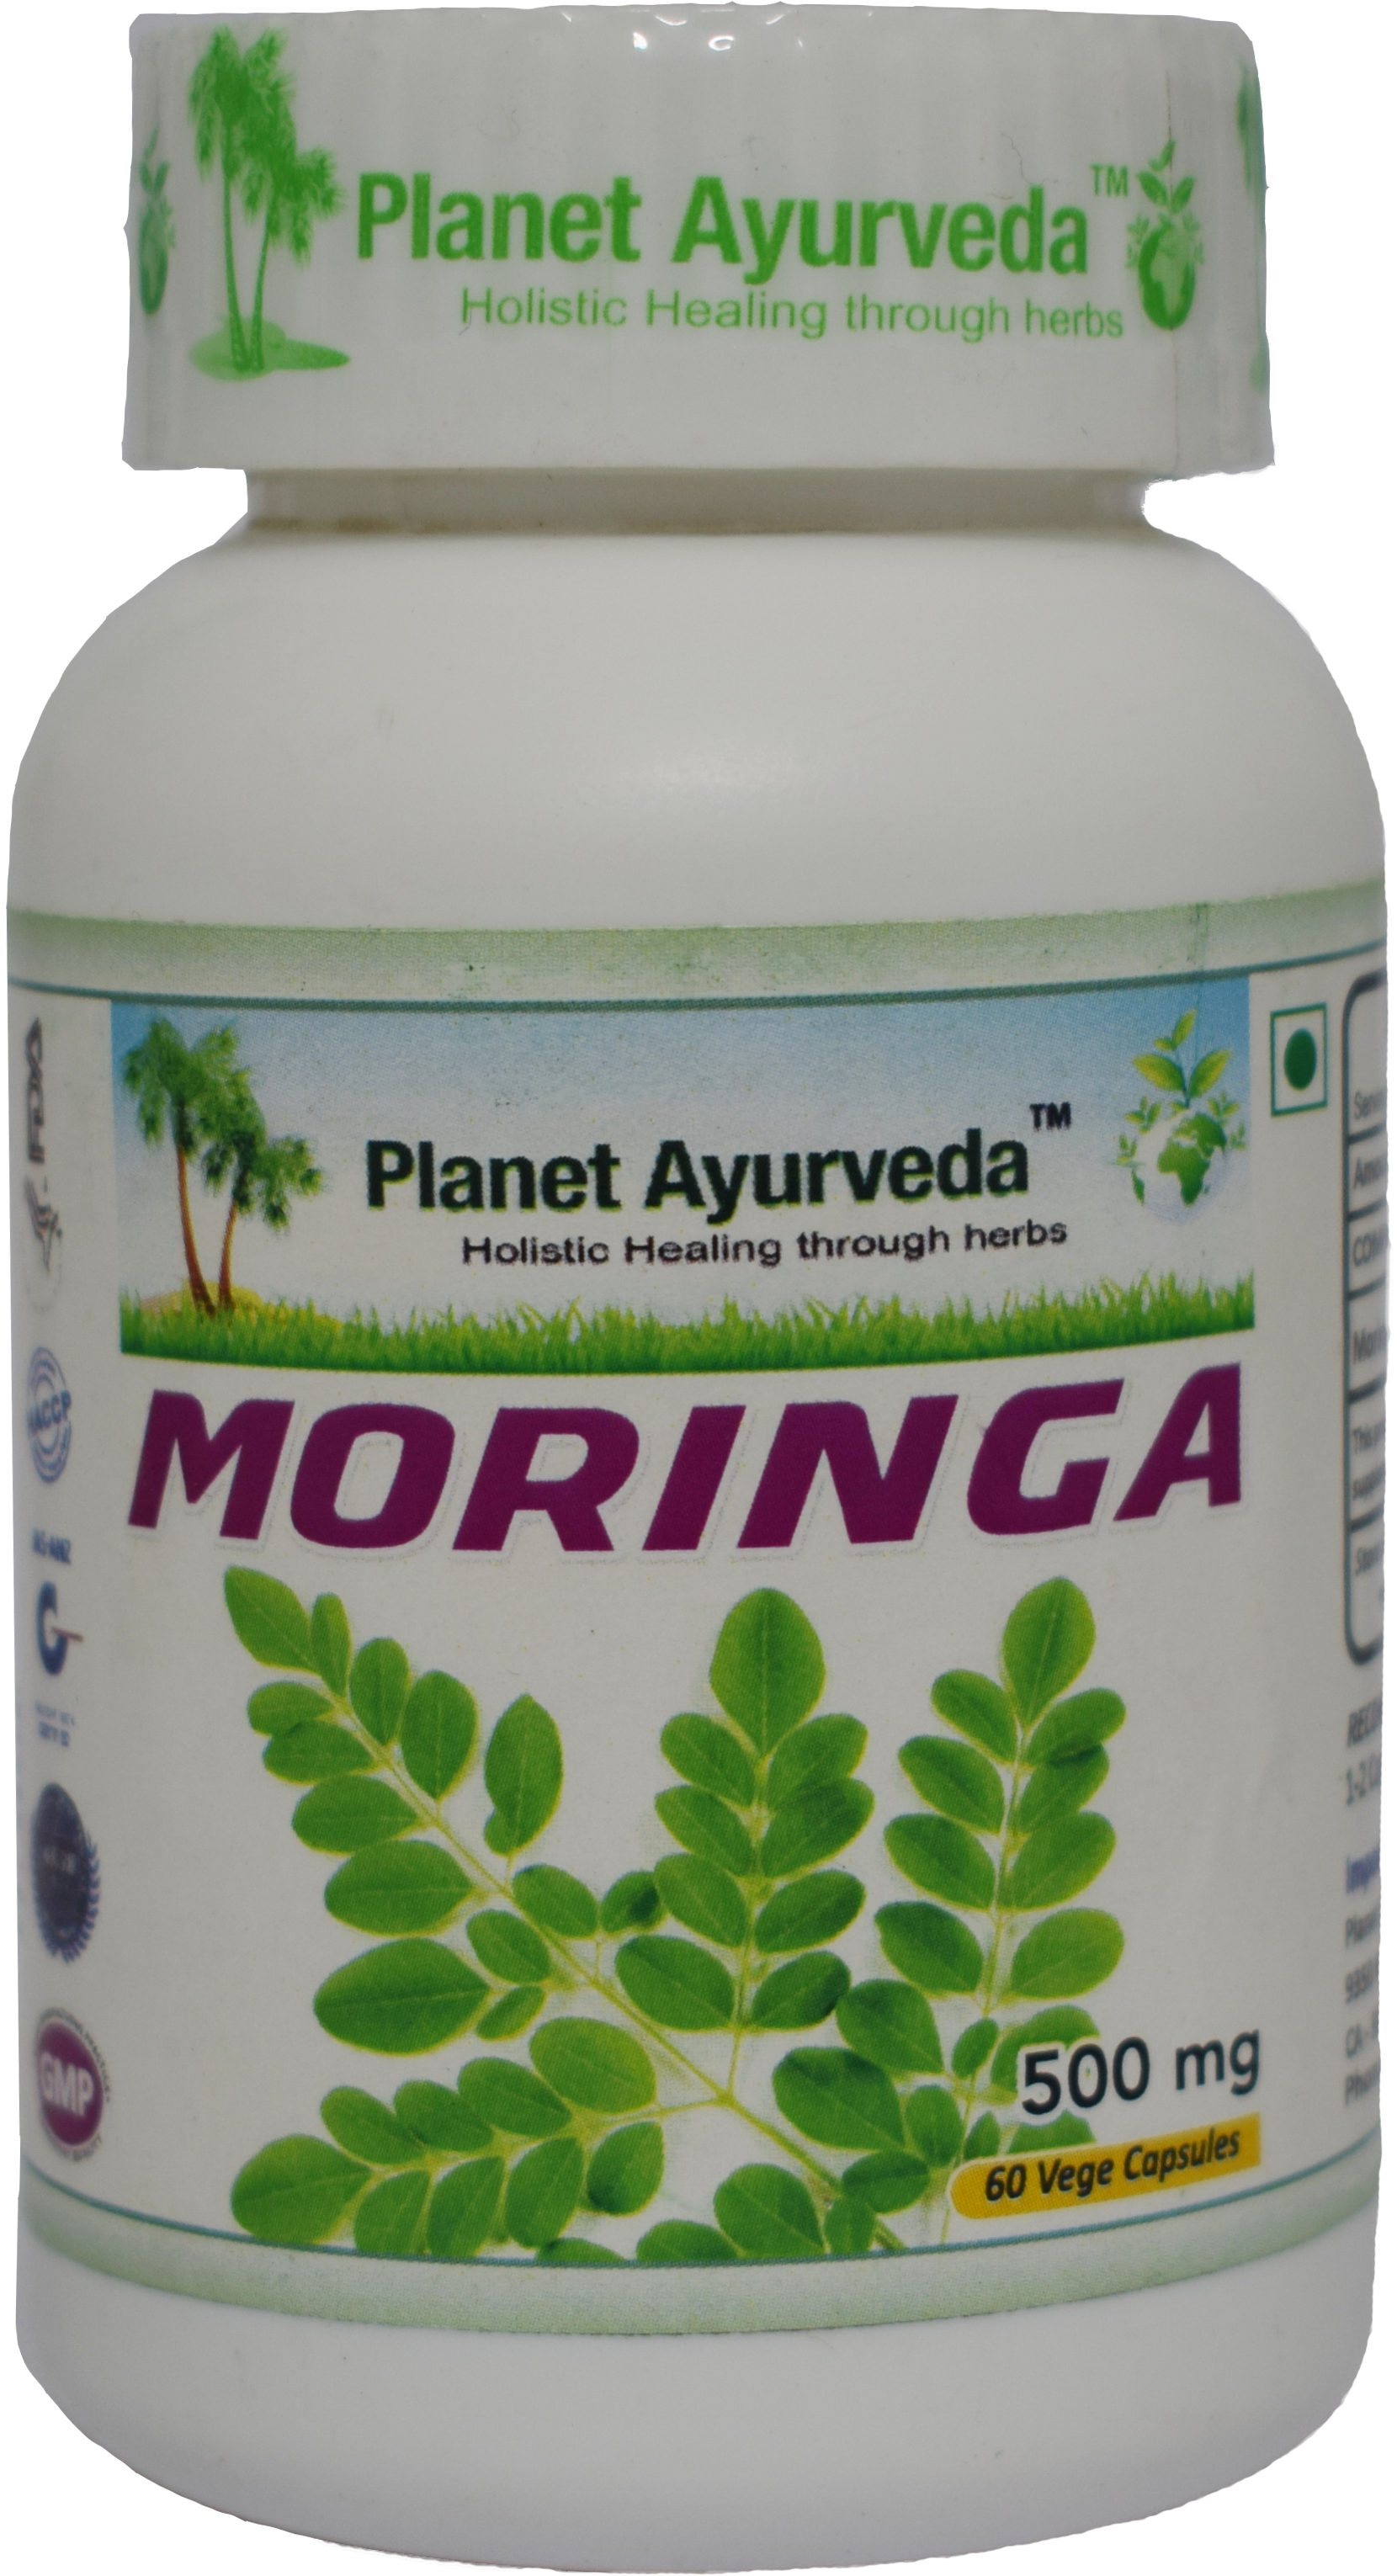 Buy Planet Ayurveda Moringa  Capsules at Best Price Online